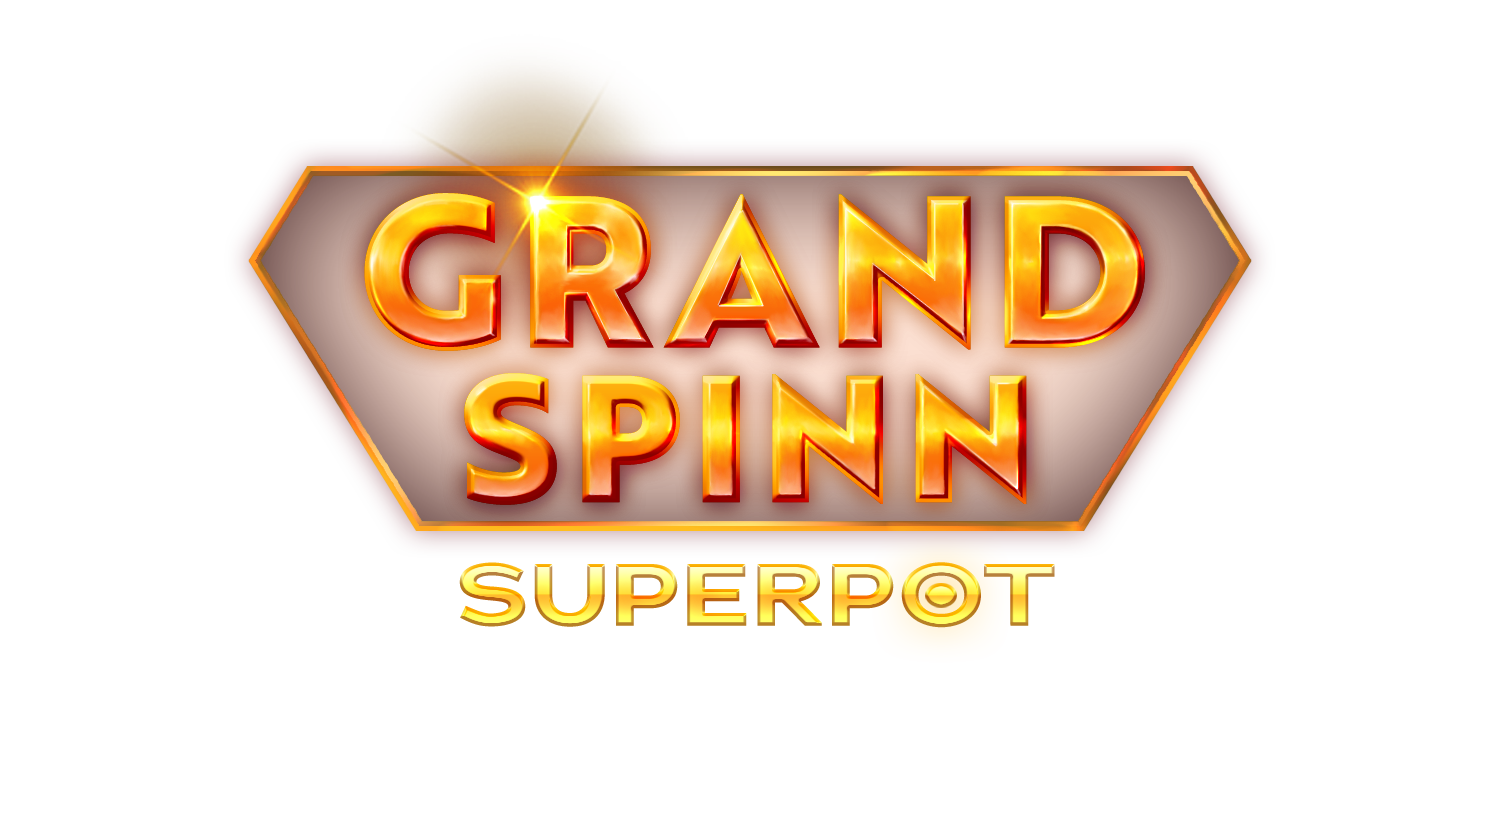 02_logo_superpot_grandspinn.png thumbnail